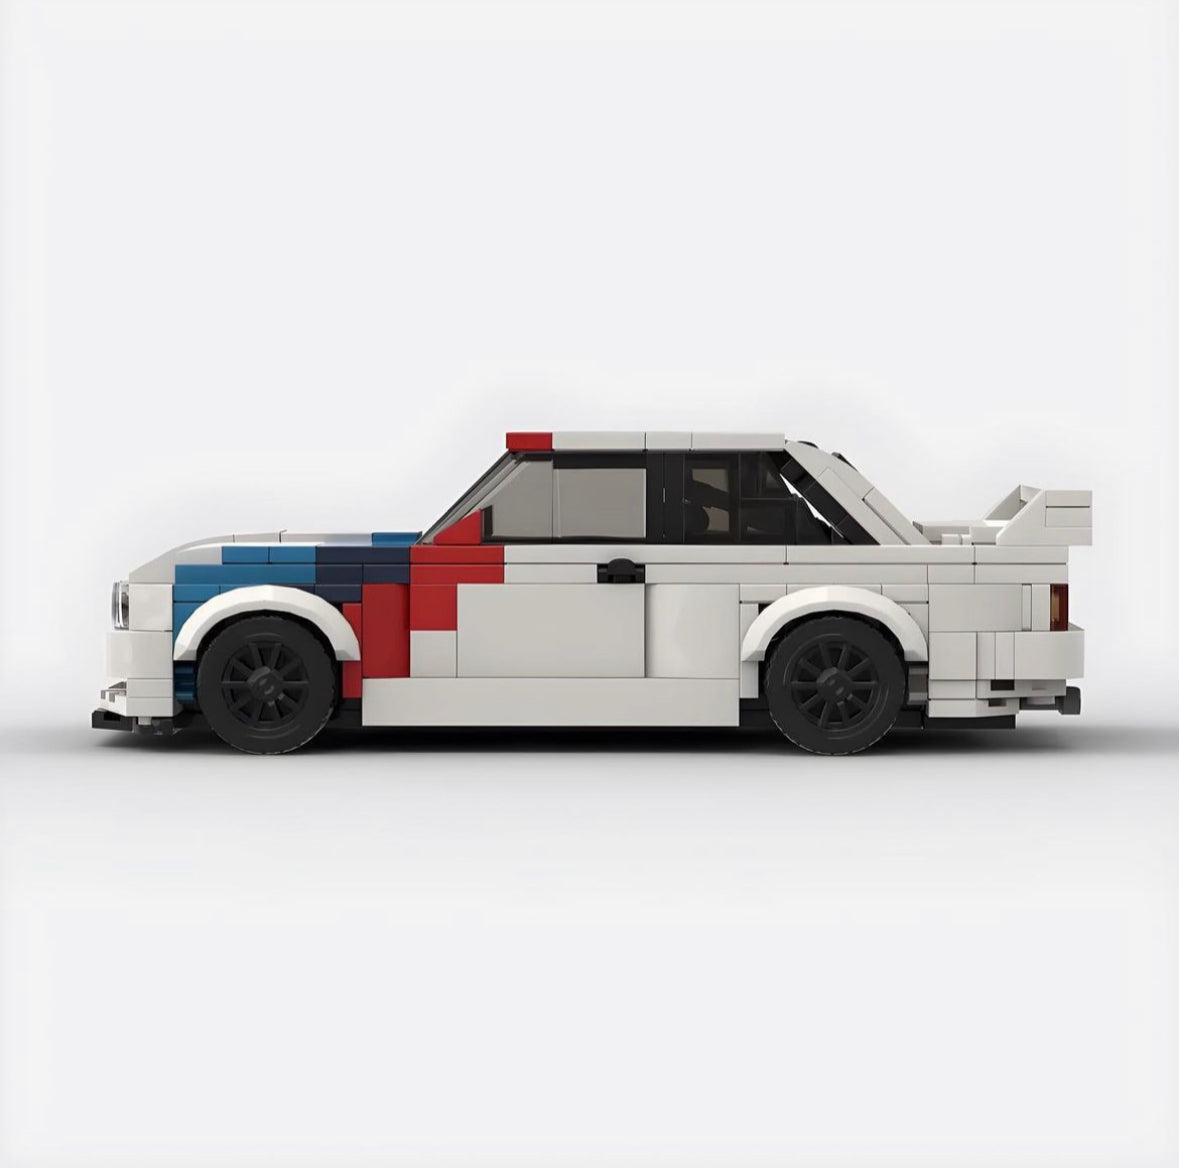 Racing Lego MOC car collection